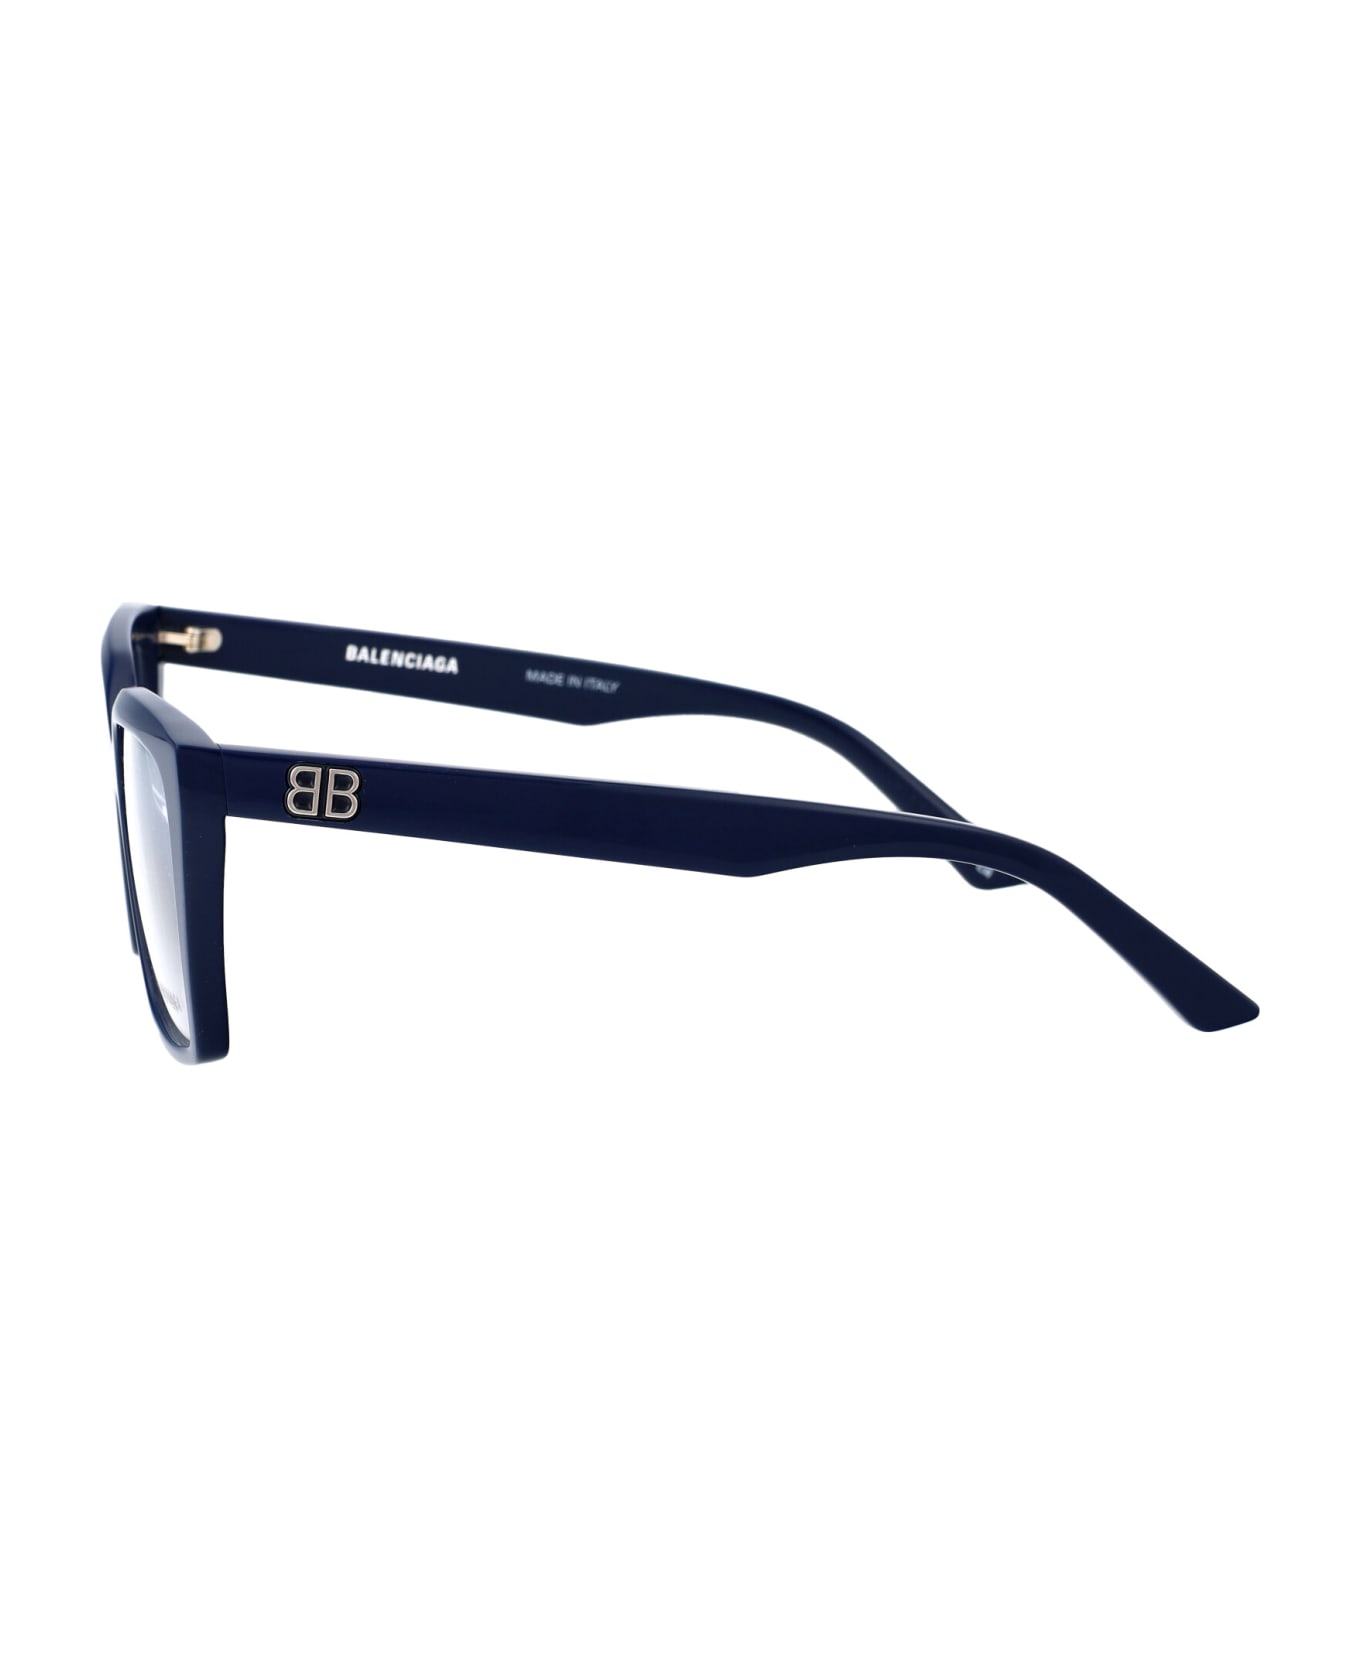 Balenciaga Eyewear Bb0130o Glasses - 010 BLUE BLUE TRANSPARENT